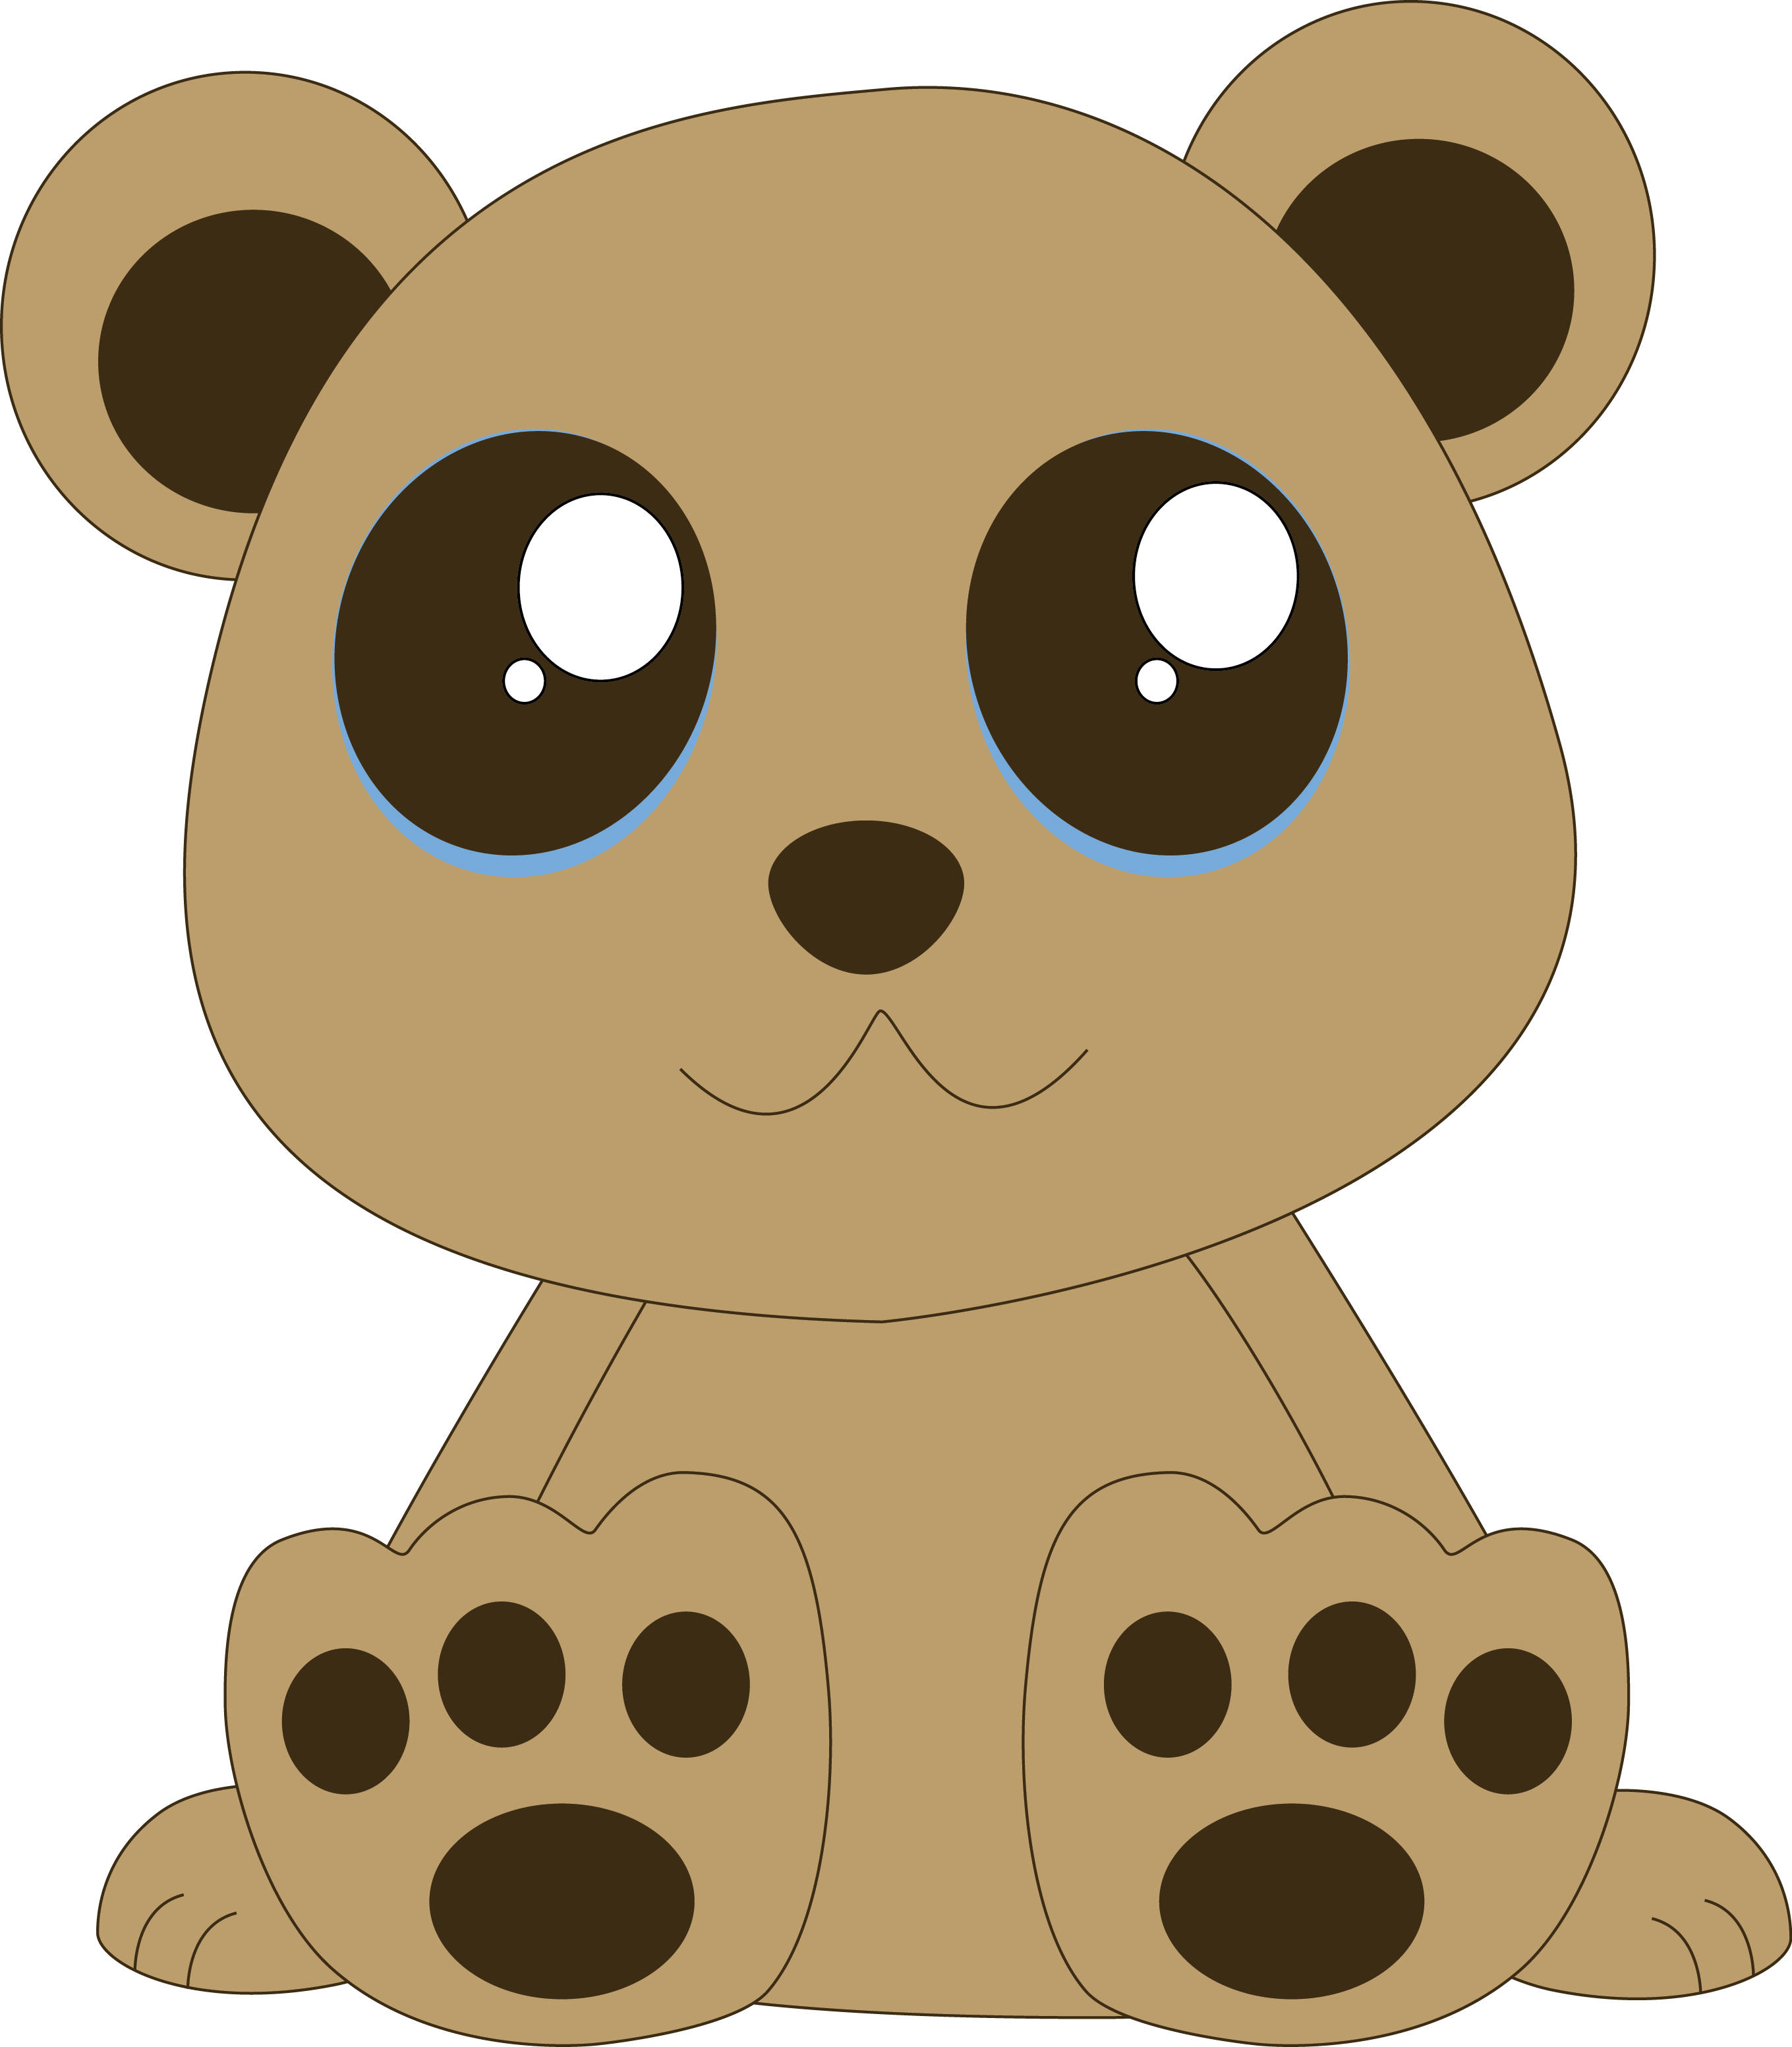 Bear teddy teddy bear bear drawing free image download